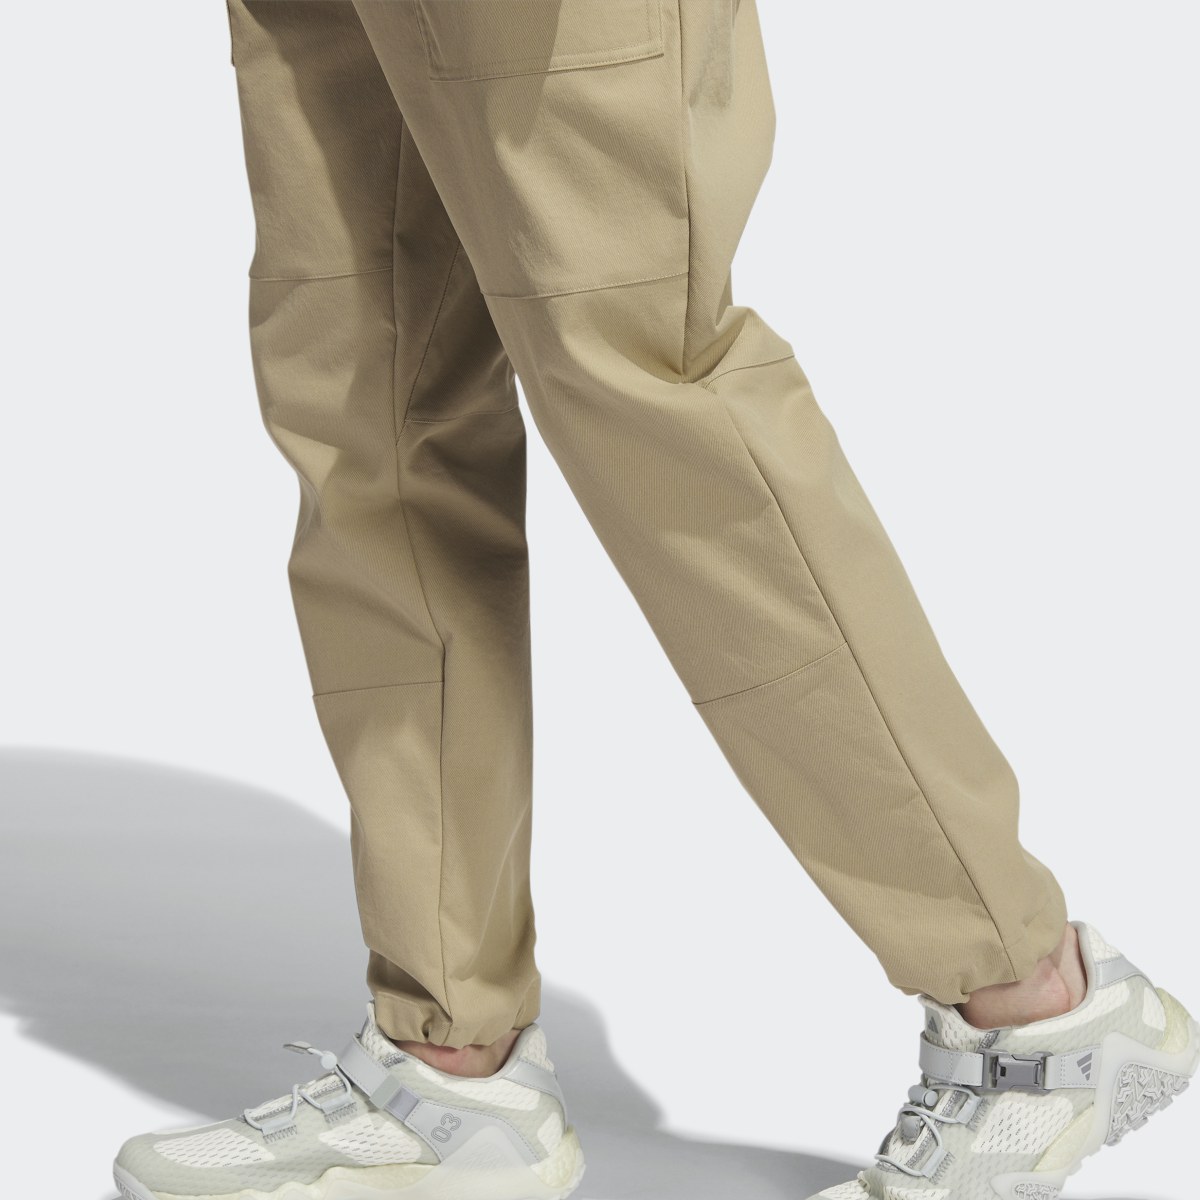 Adidas Adicross Golf Pants. 7